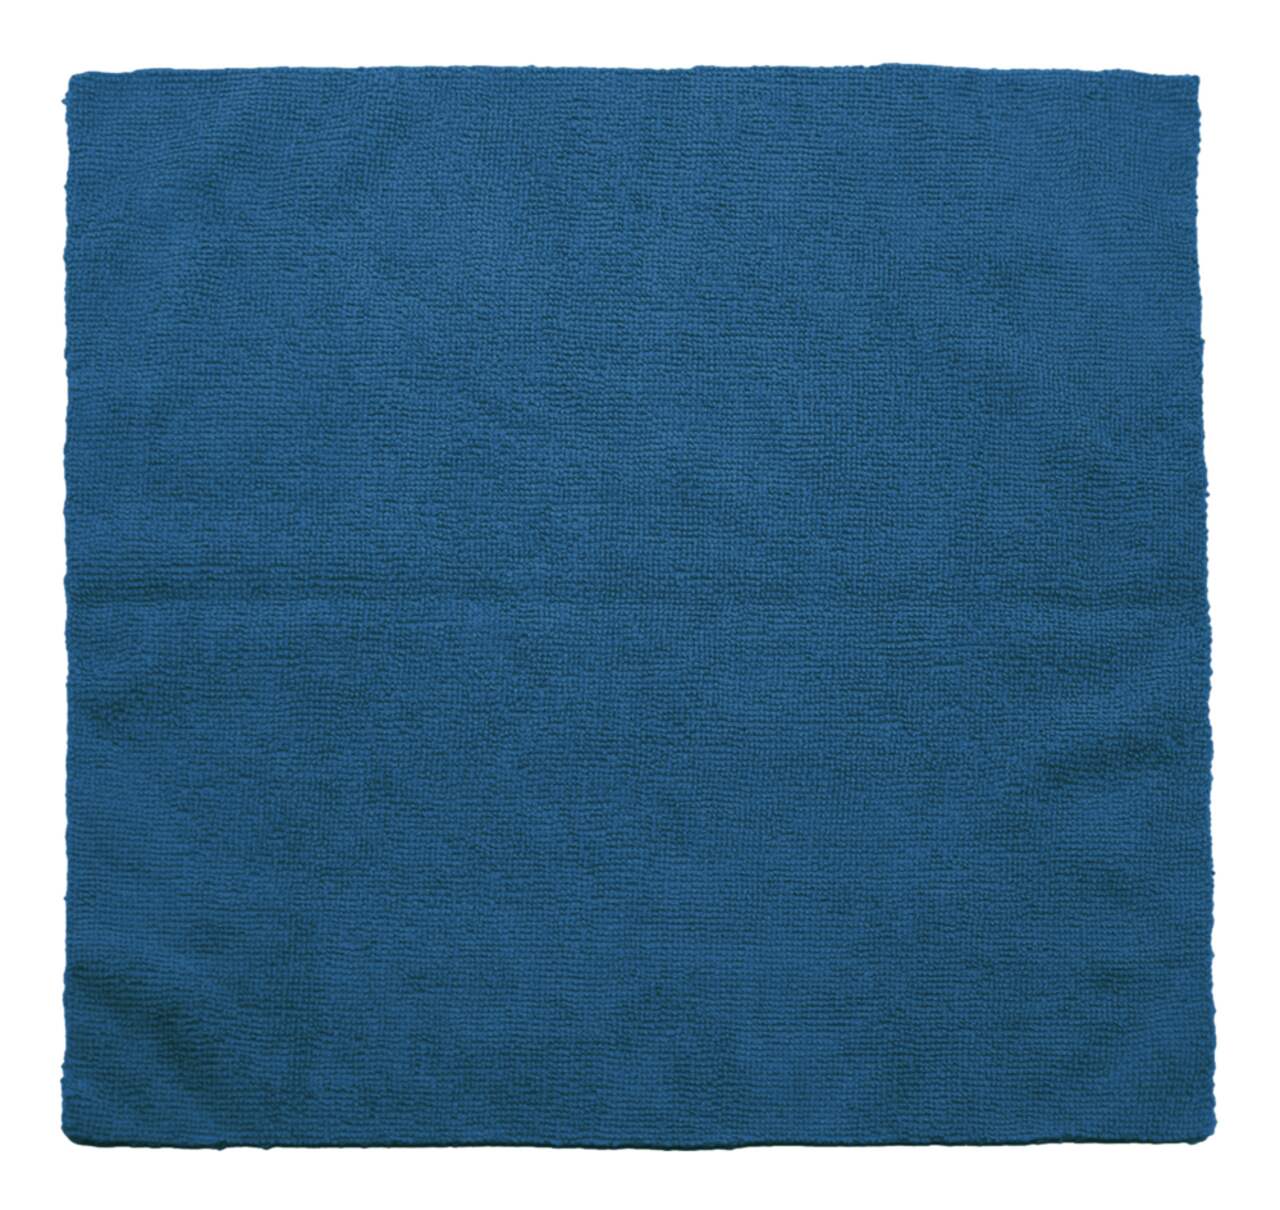 SIMONIZ Microfibre Multi-Purpose Edgeless Towels, 12 x 12-in, Multi-colour,  50-pk